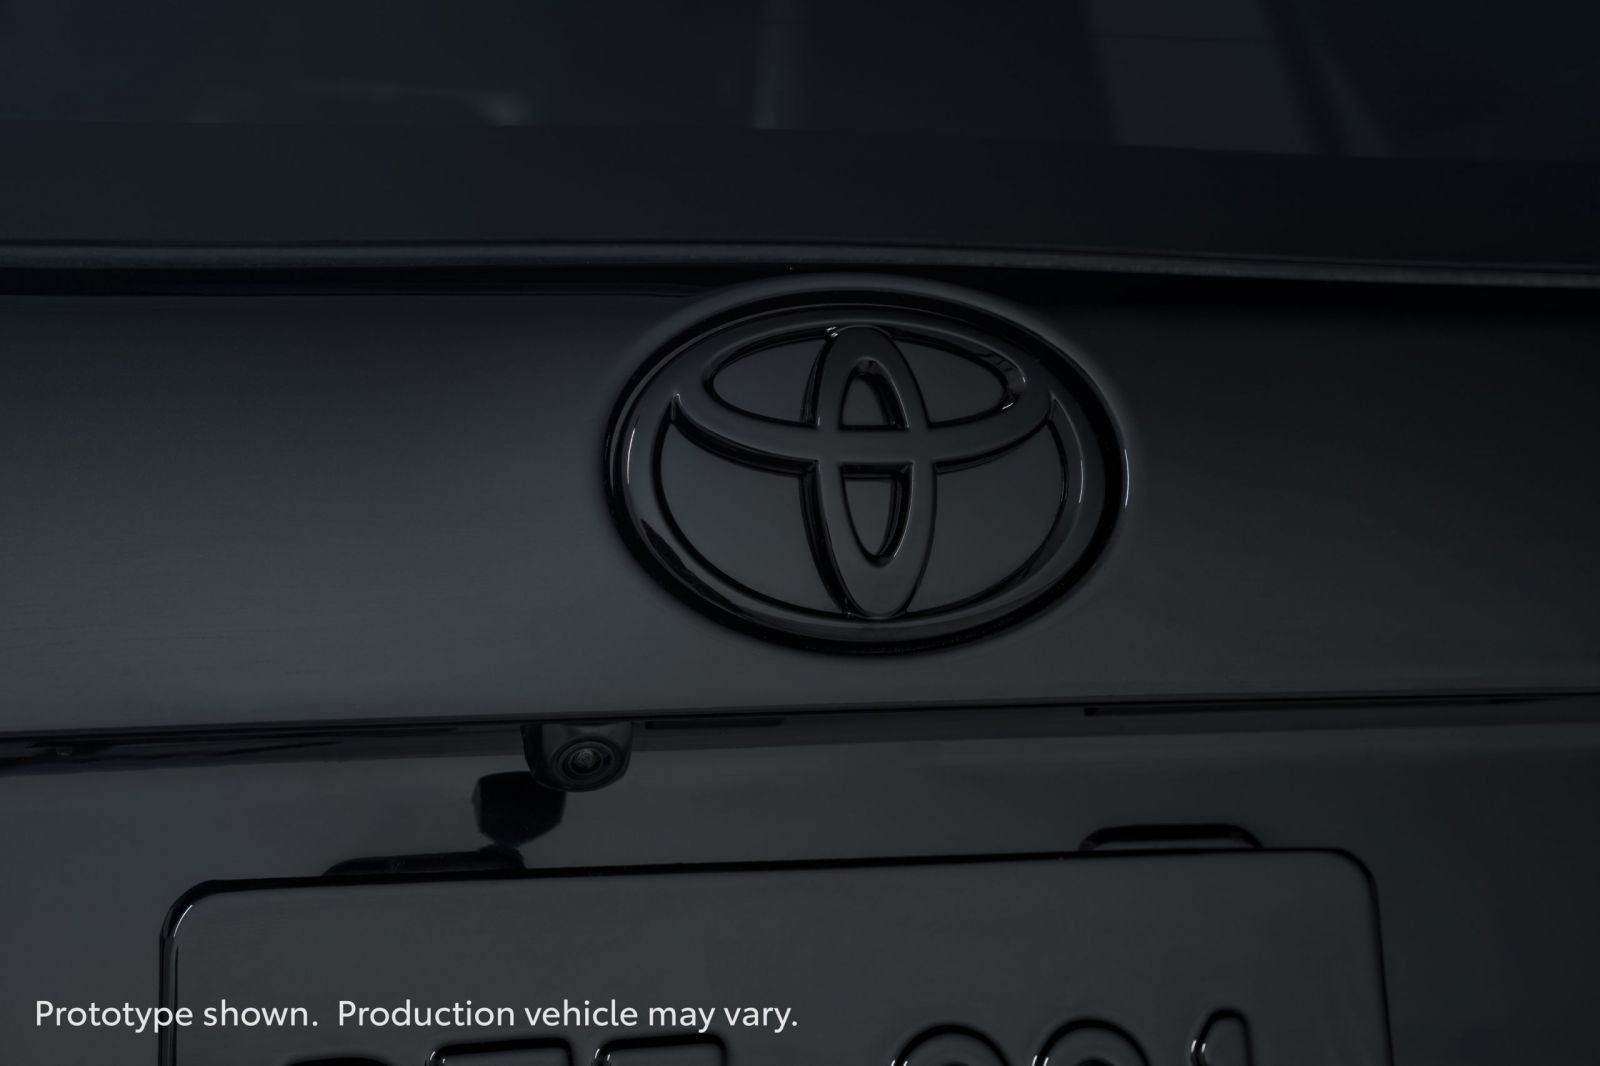 Toyota Prius Nightshade Edition